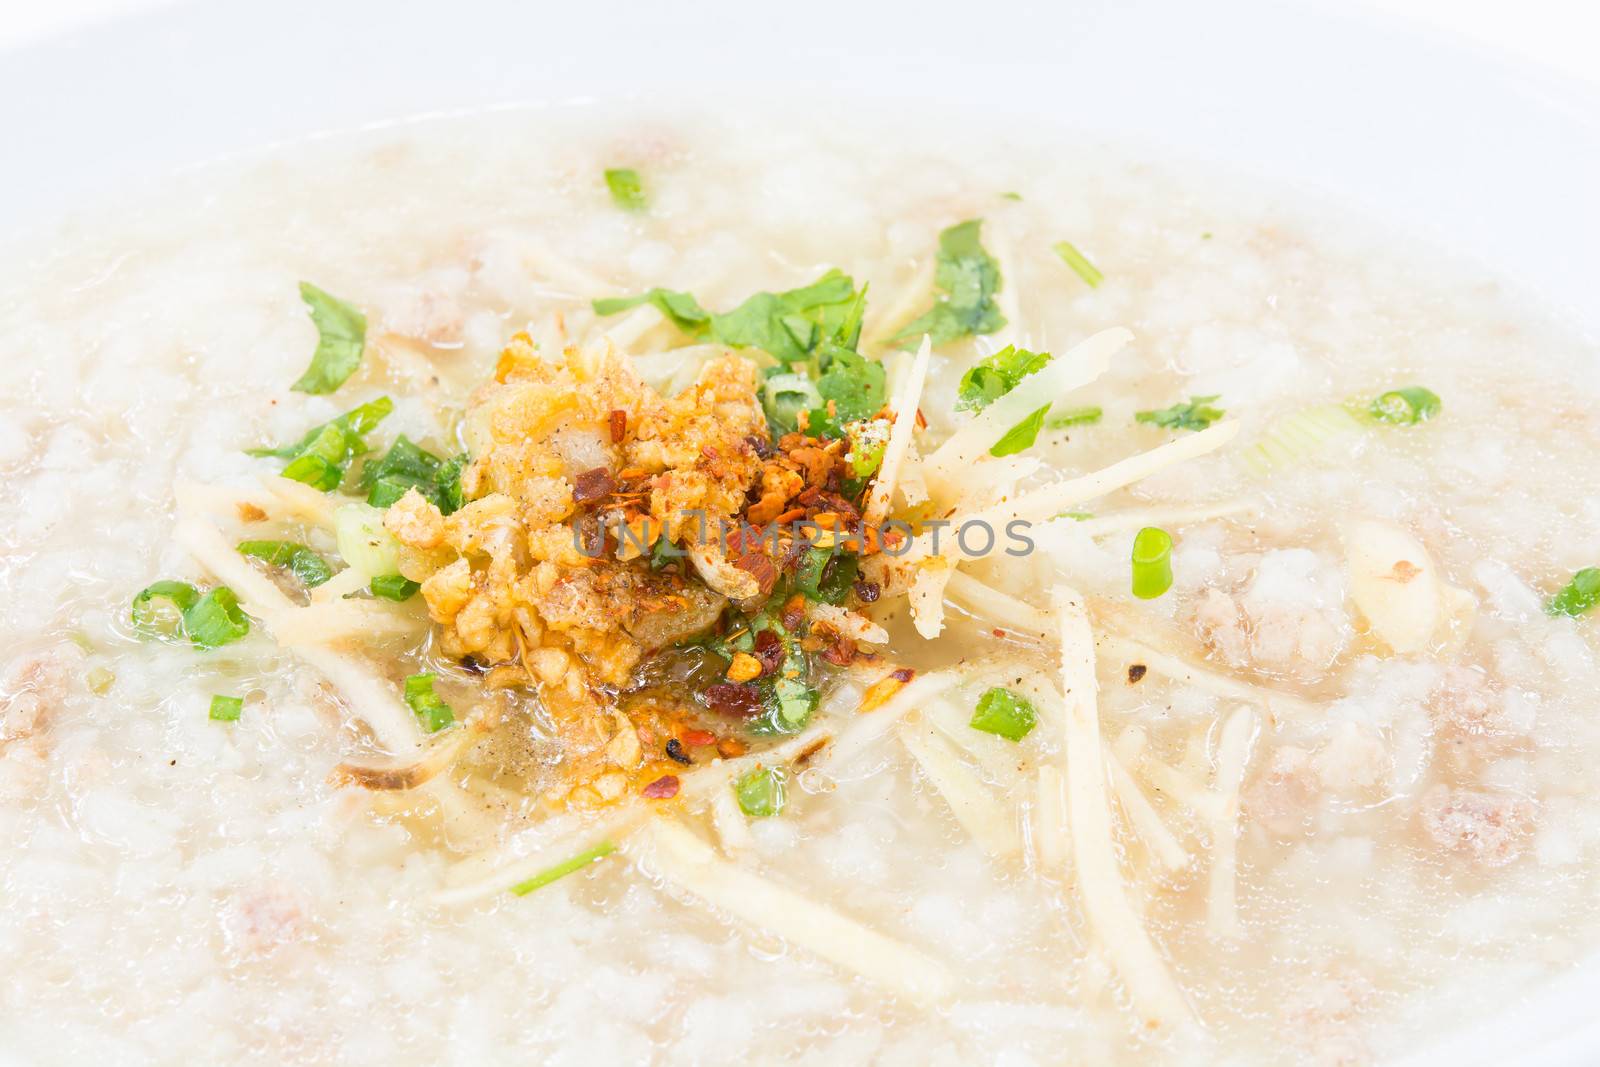 porridge rice gruel by Sorapop